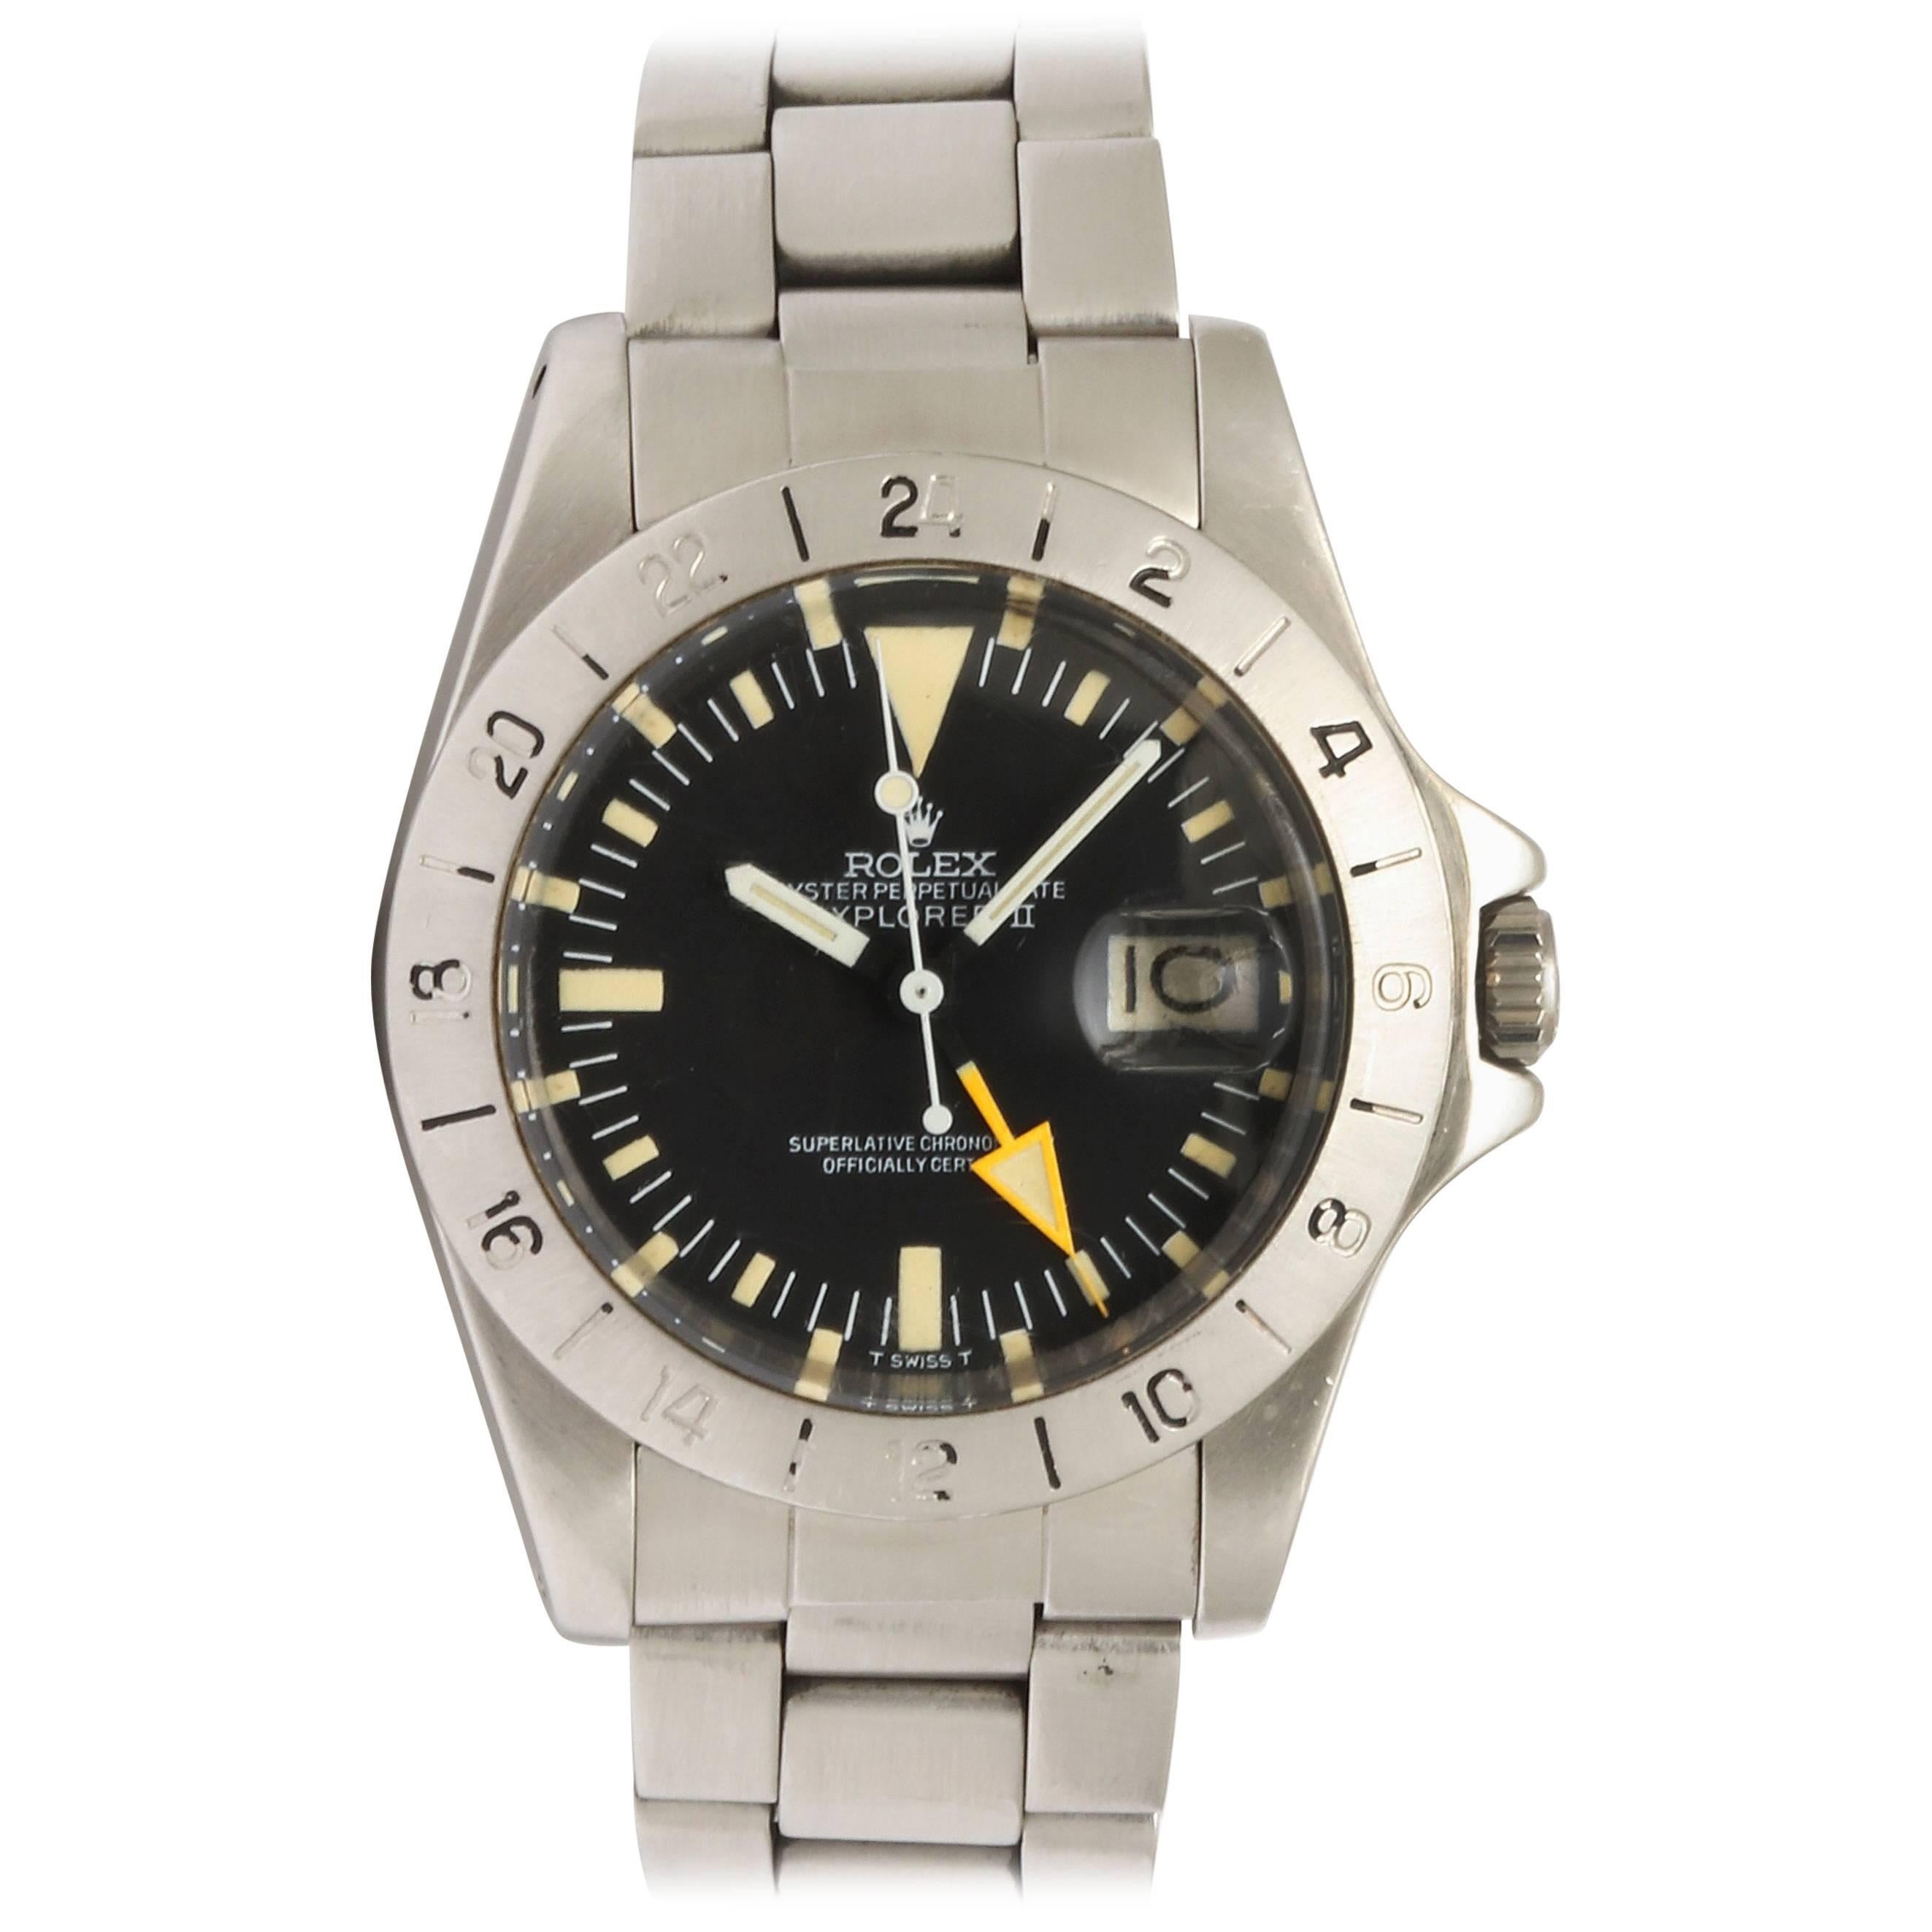 Rolex Stainless Steel Explorer II "Steve McQueen" Wristwatch Ref 1655